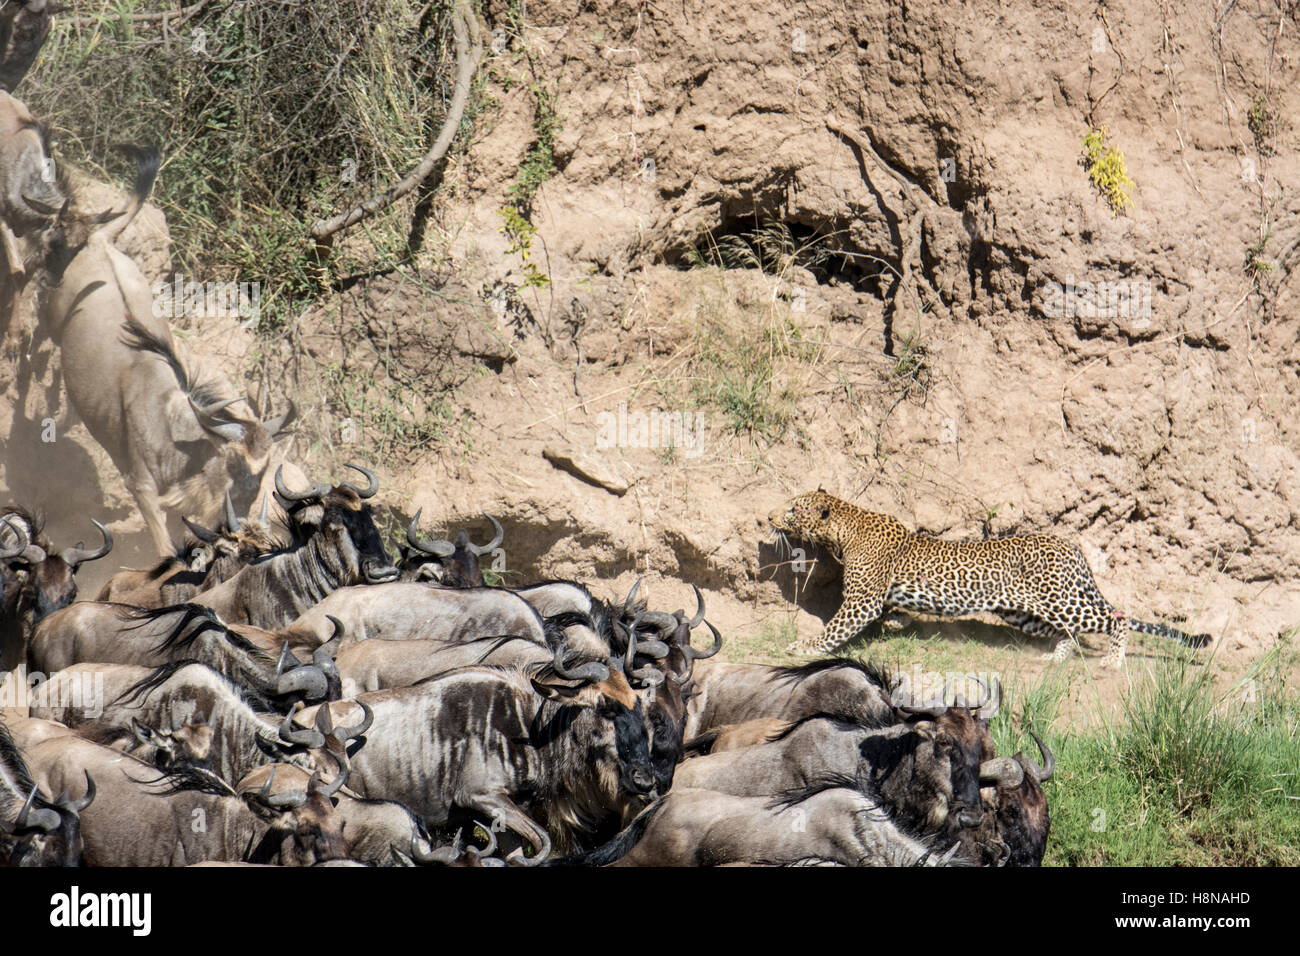 African Leopard, Panthera pardus, stalking, hunting Wildebeest, Connochaetes taurinus, Great Migration, Masai Mara Kenya, Africa Stock Photo